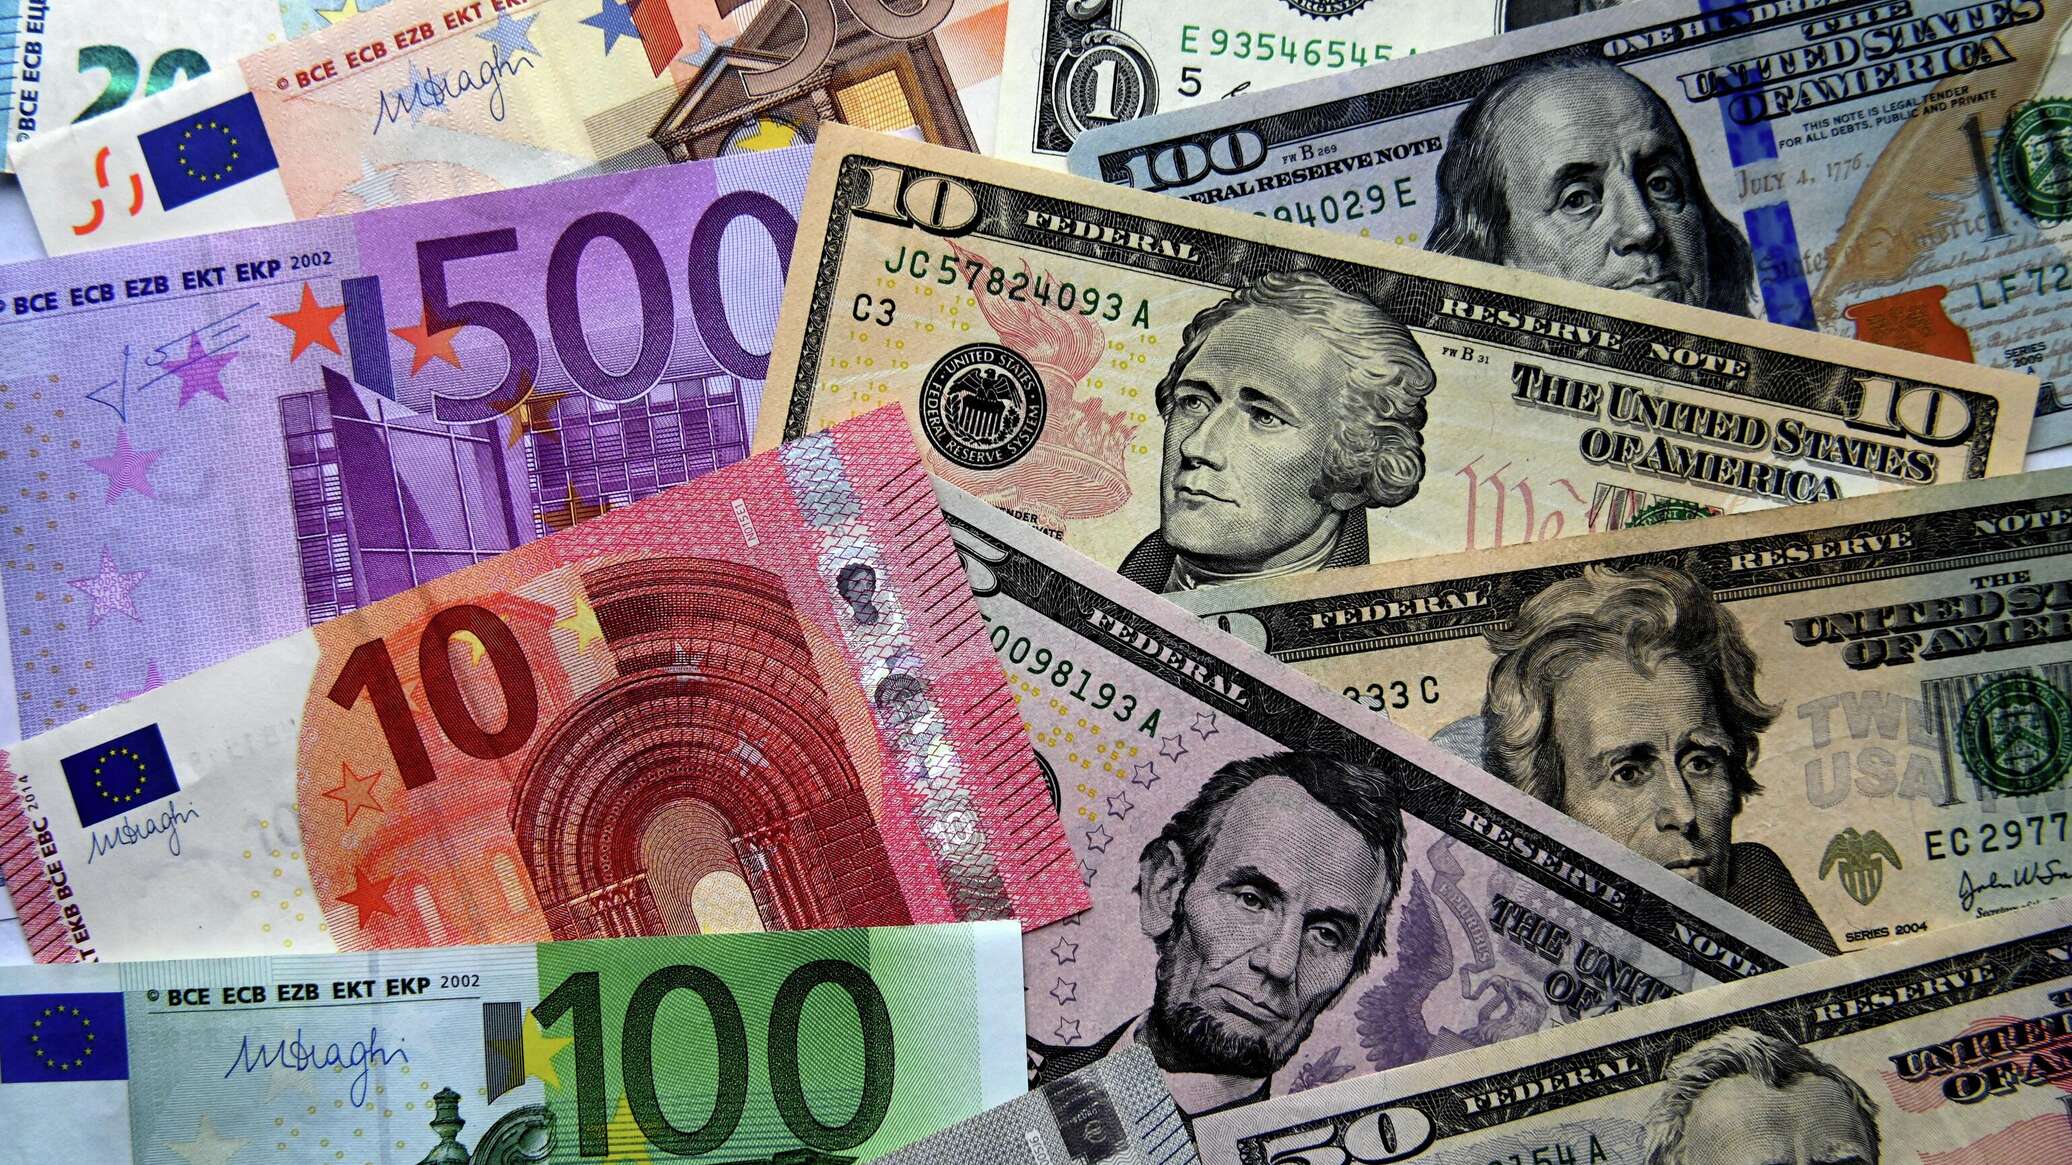 Доллар евро российский. Доллар и евро. Купюры евро и доллара. Фото долларов и евро. Валюта доллар евро.